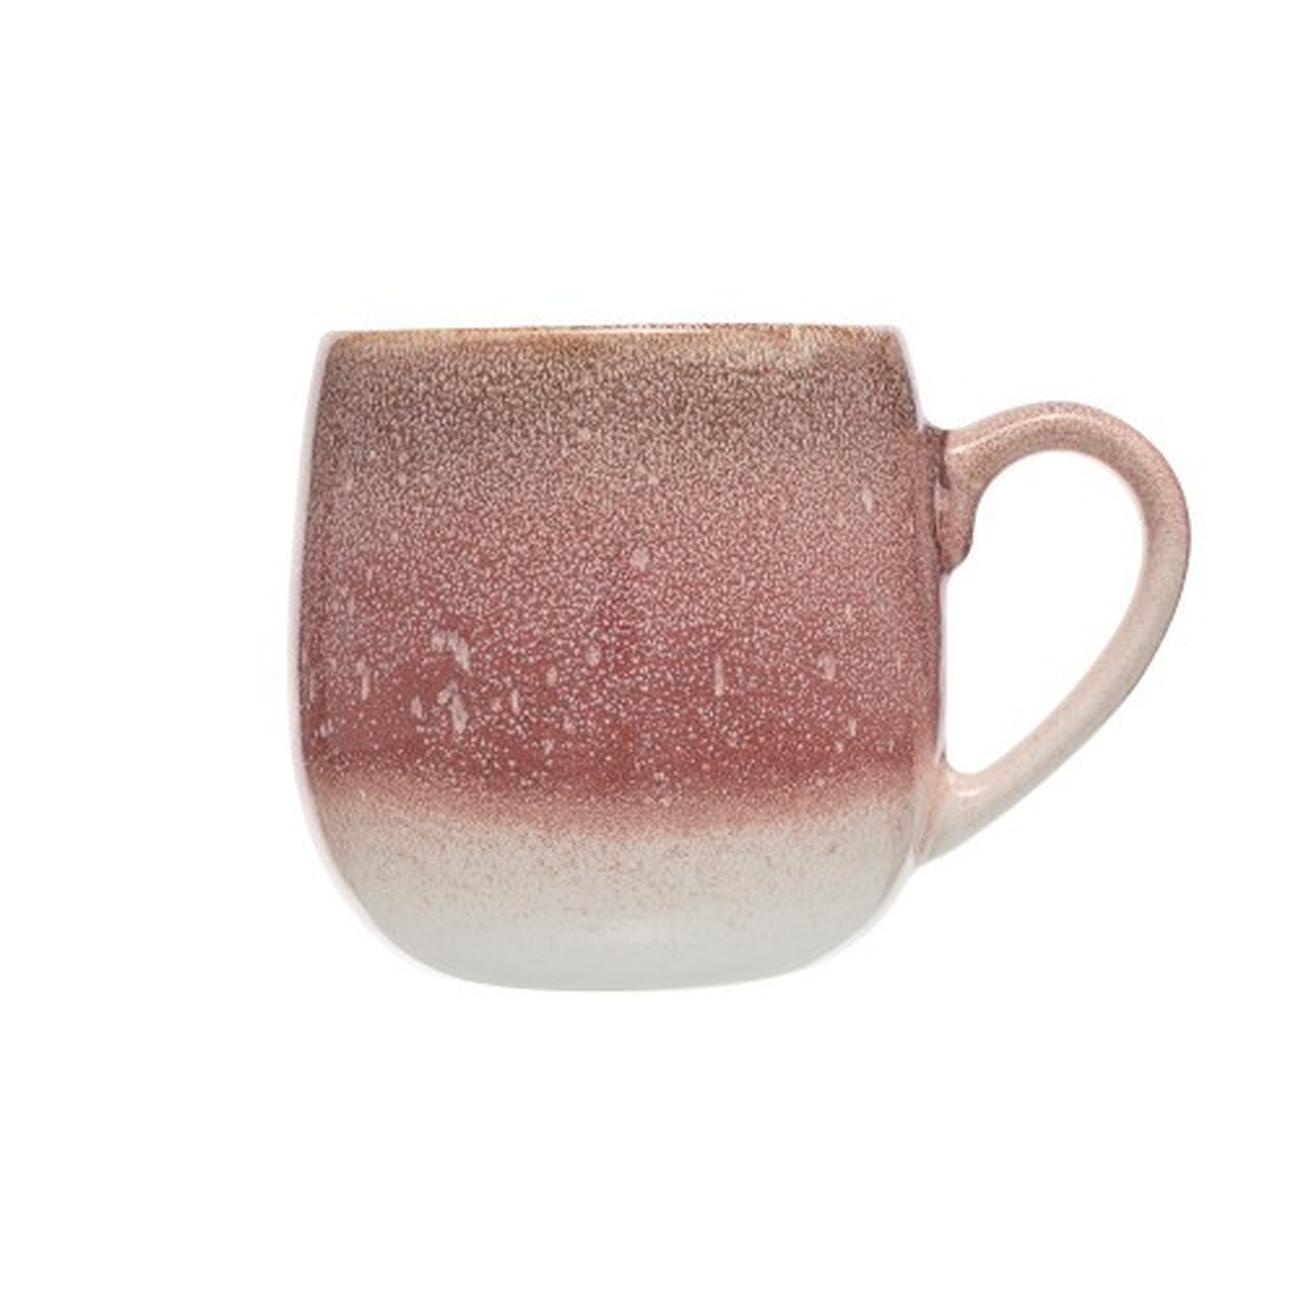 Siip-Reactive-Glaze-Ombre-Pink-Mug - Siip Reactive Glaze Ombre Pink Mug